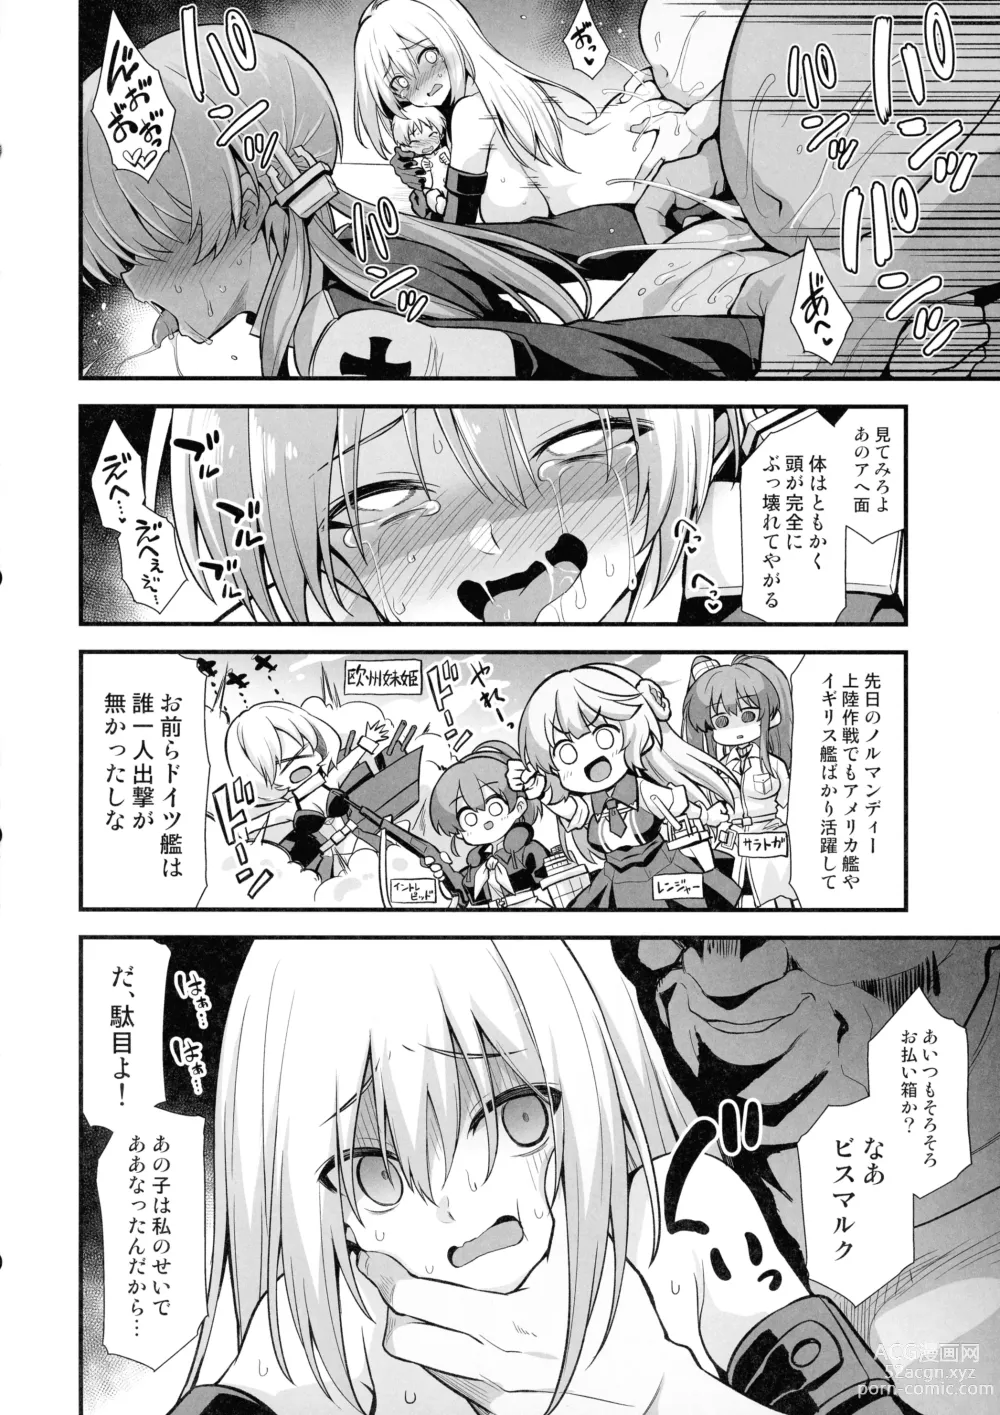 Page 11 of doujinshi Kanmusu Chakunin Mugen Hensai Botai Rankou Prinz Eugen & Bismarck